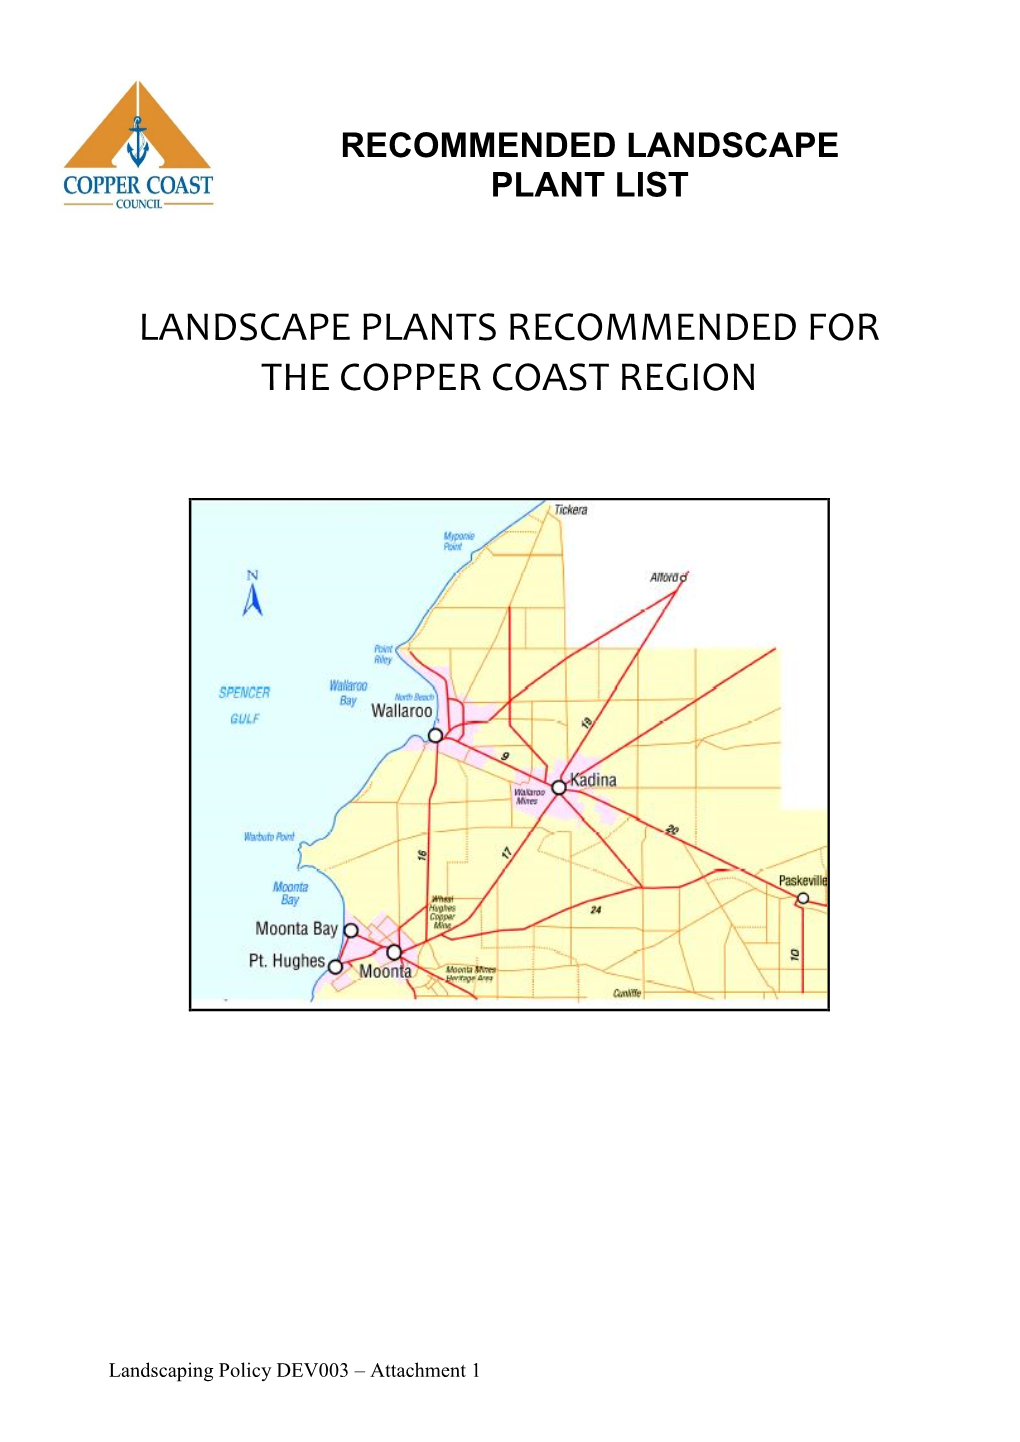 Recommended Landscape Plant List